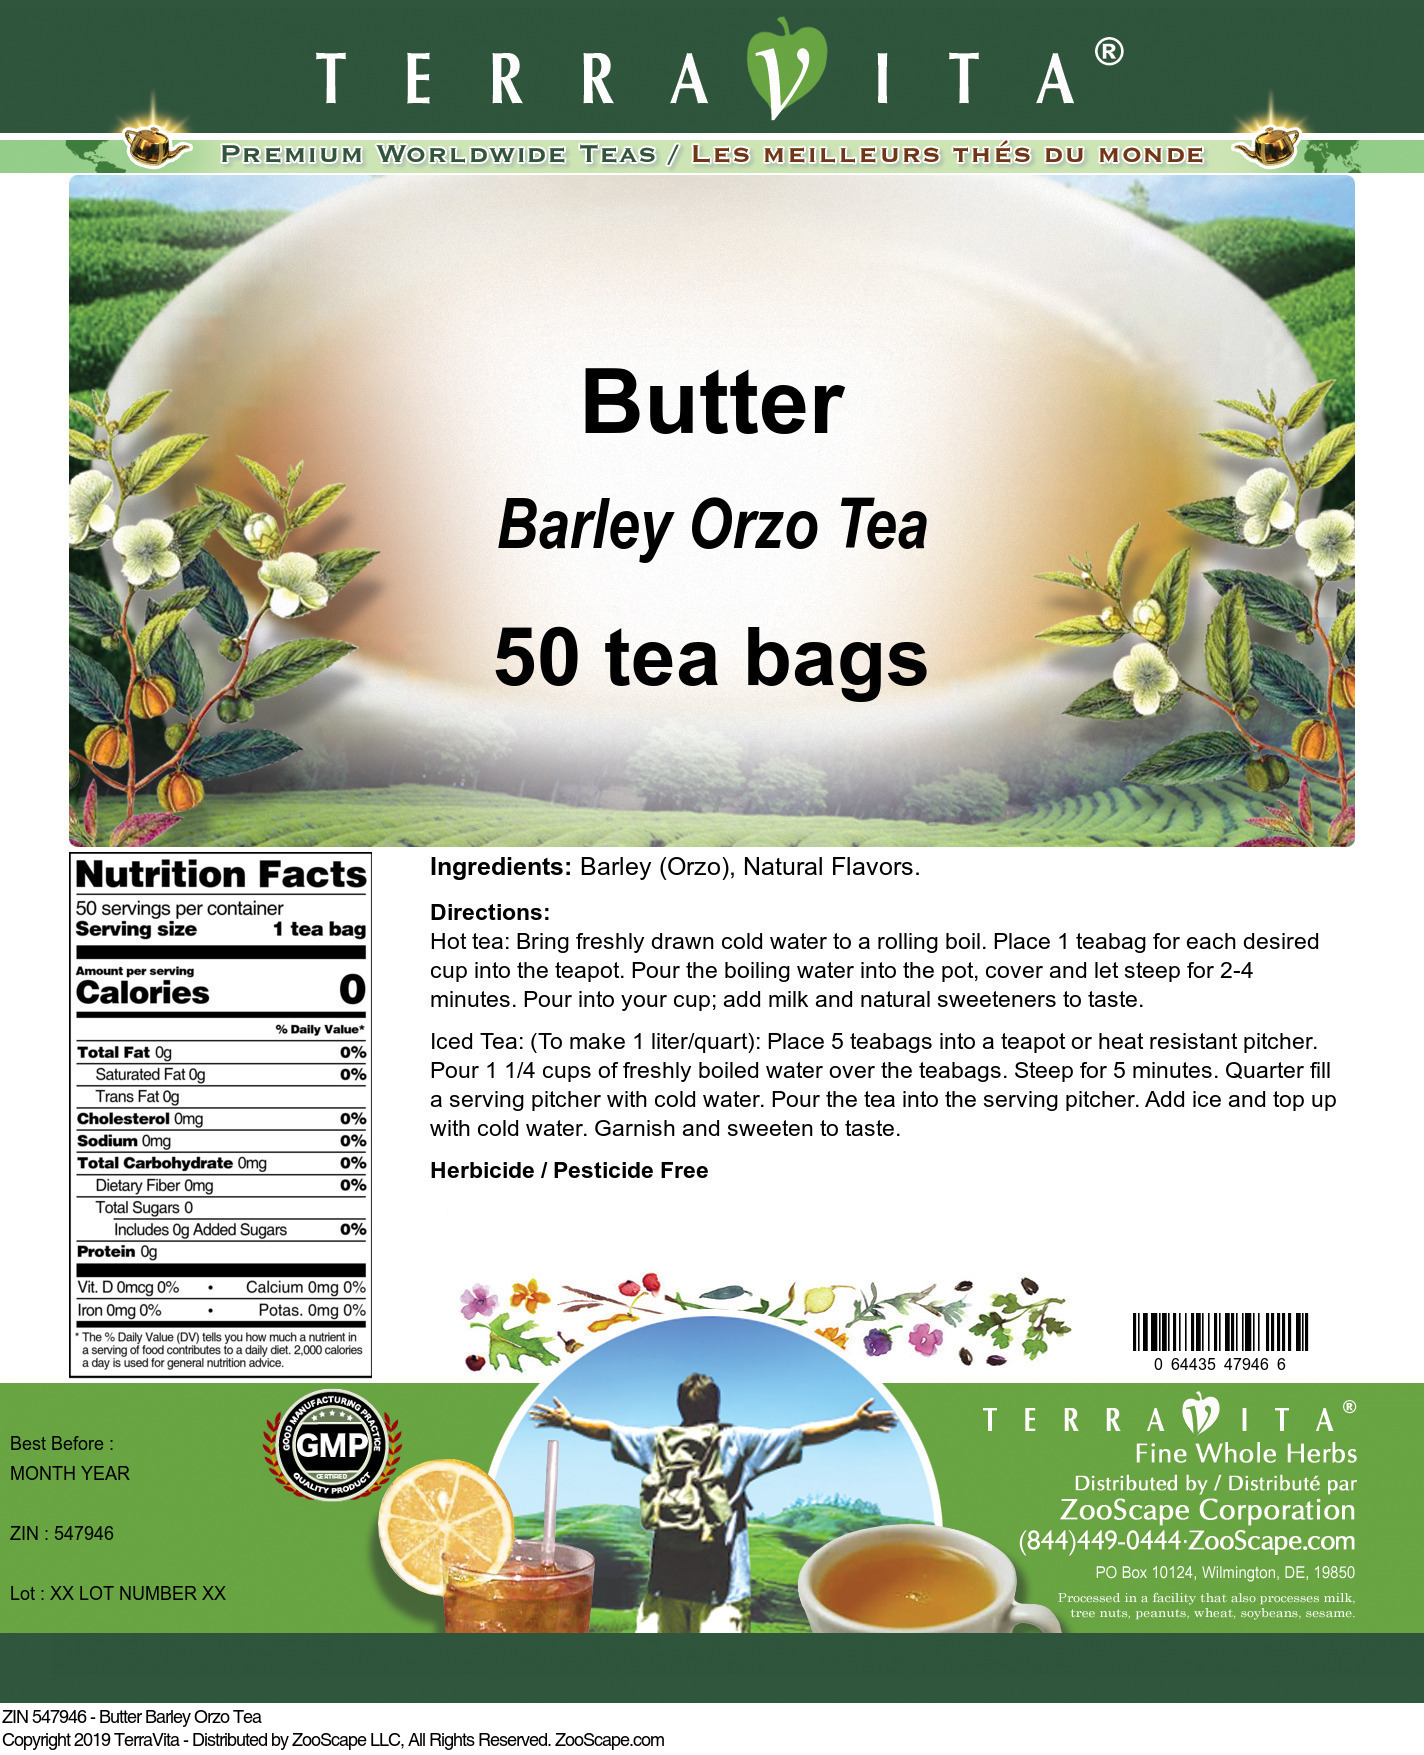 Butter Barley Orzo Tea - Label